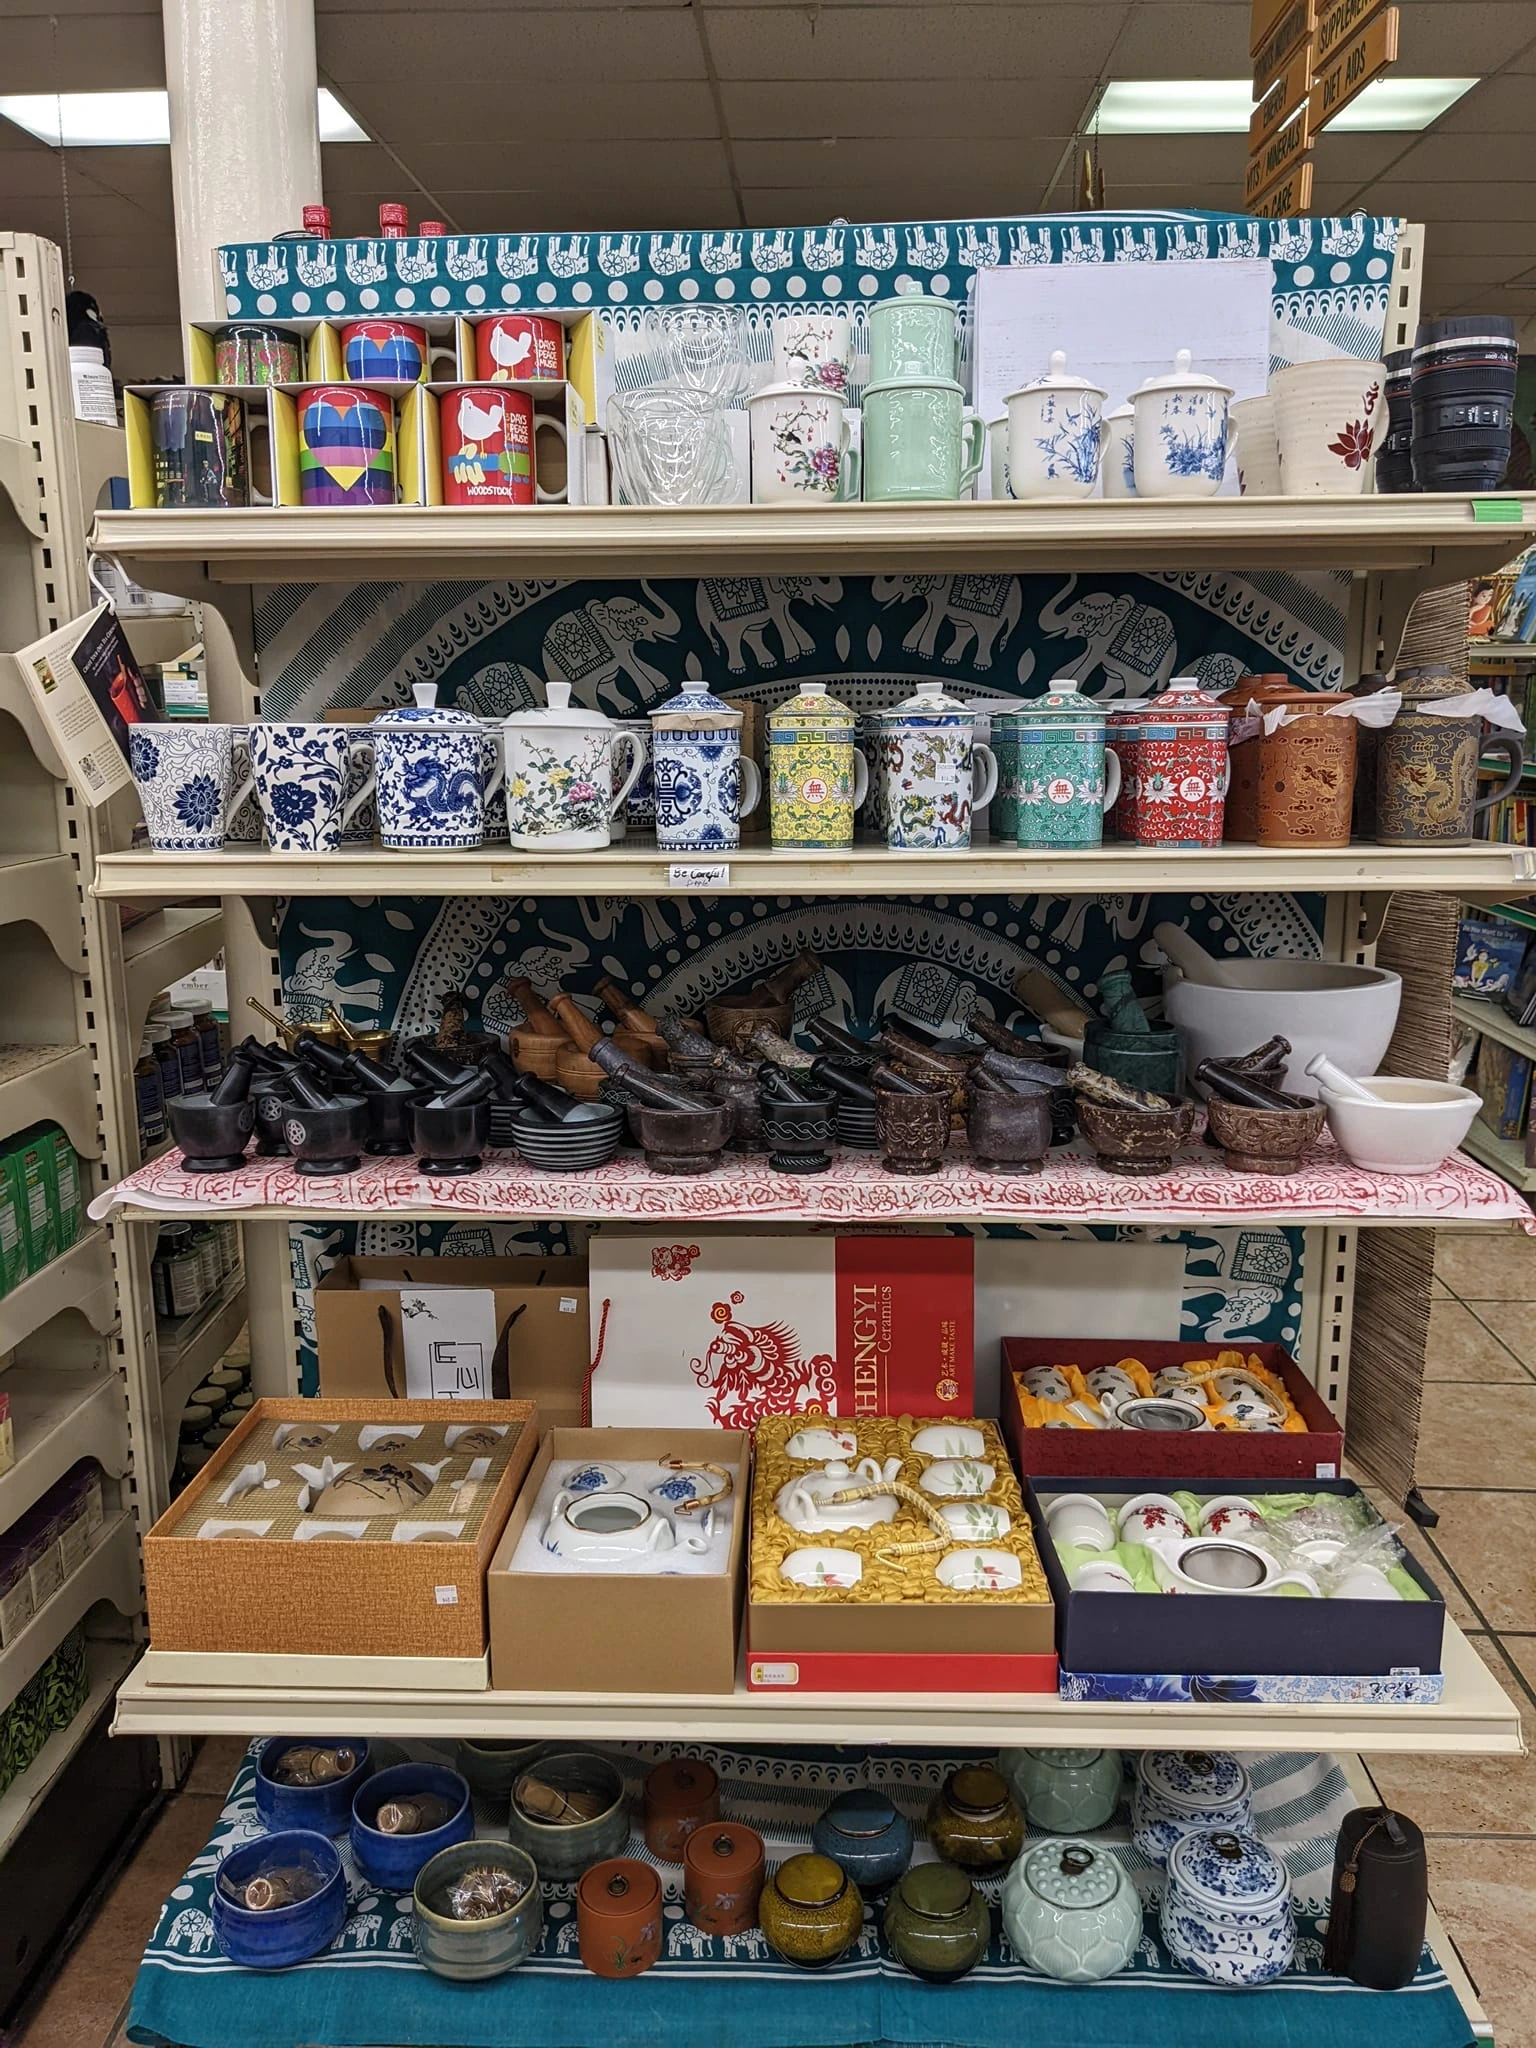 A shelf of teapots and other tea paraphernalia